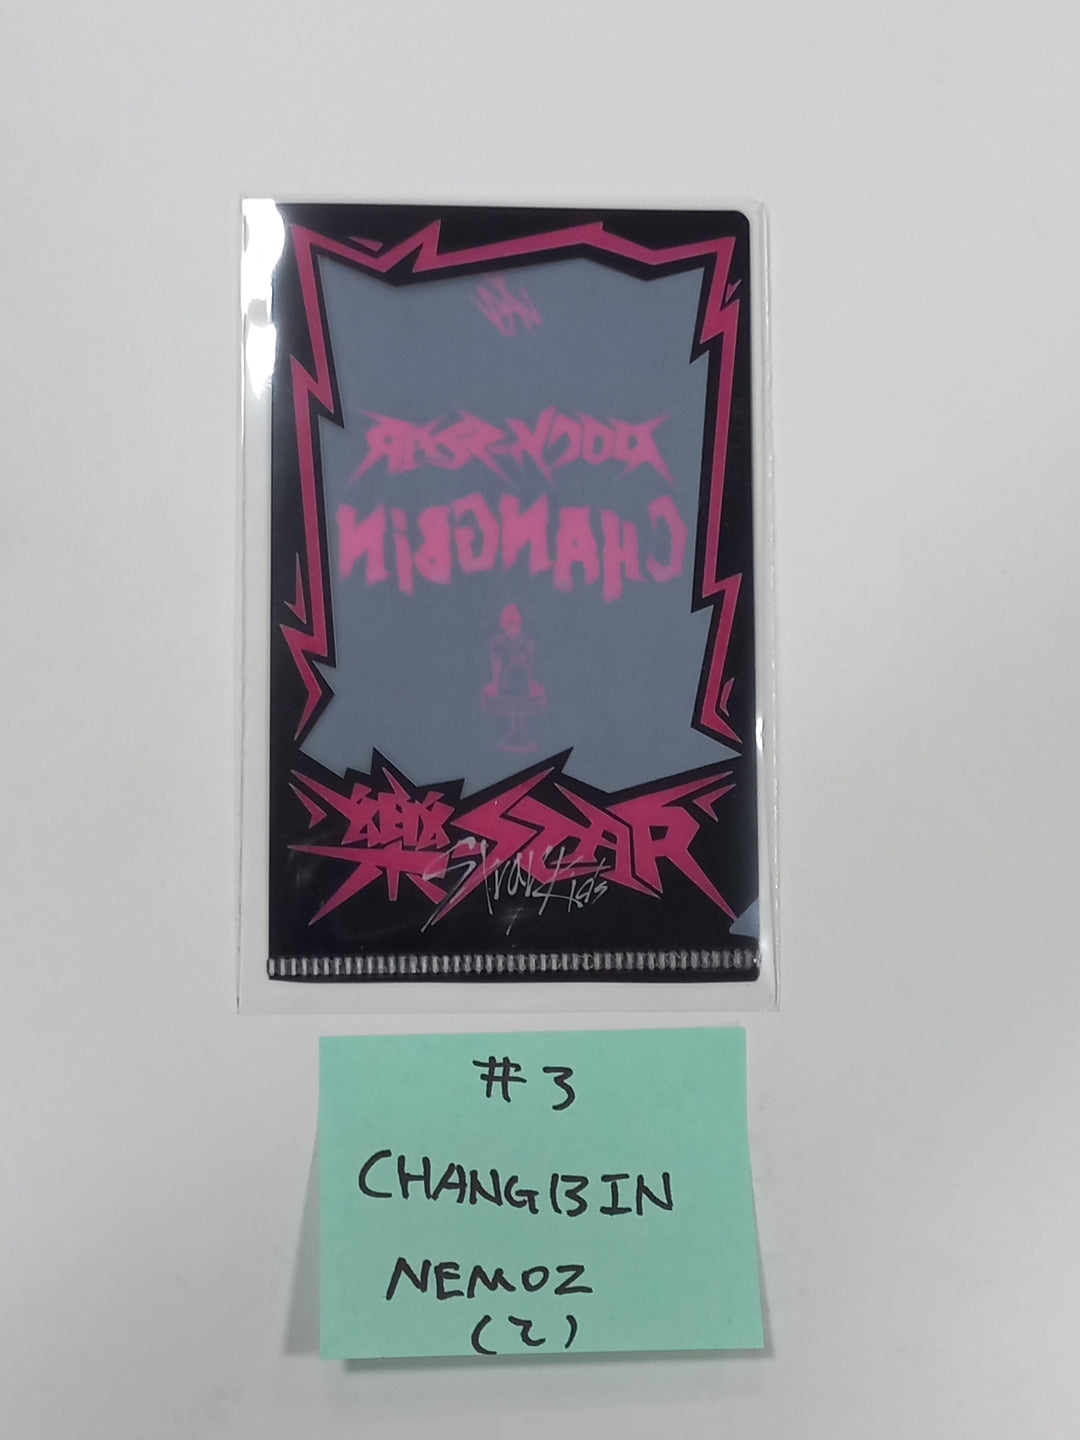 Stray Kids "樂-Star" - Nemoz Shop Pre-Order Benefit Mini L-Holder [Platform Nemo Ver.] [Restocked] [23.11.16]